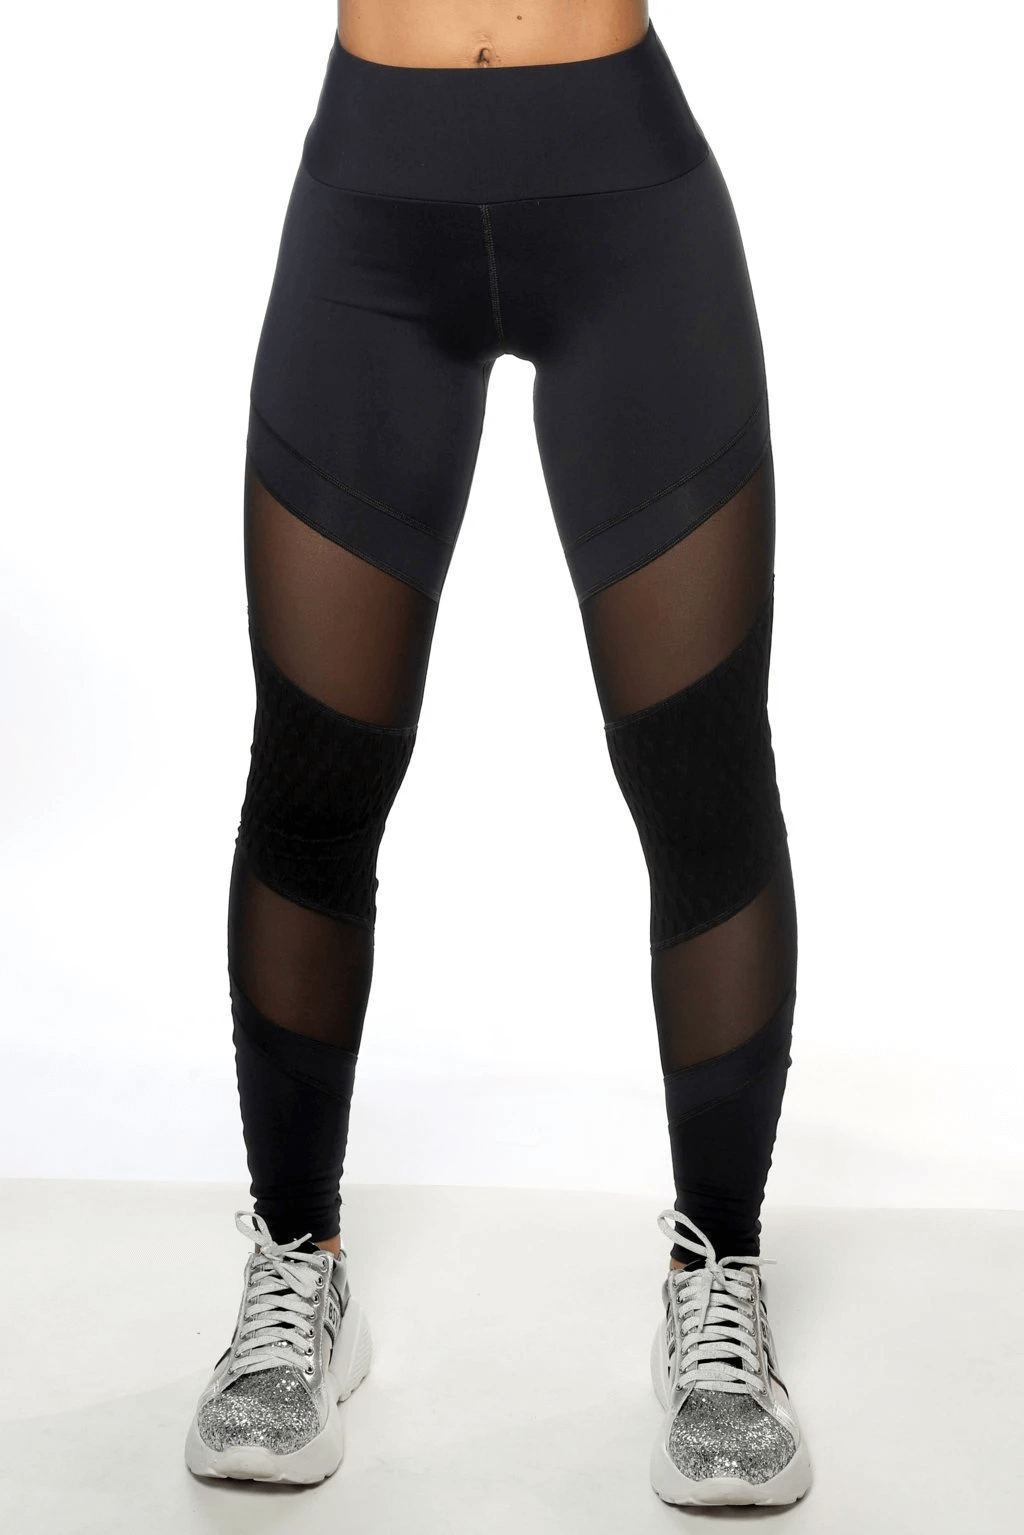 Calza deportiva mujer eugenia negro frente – QueenFit